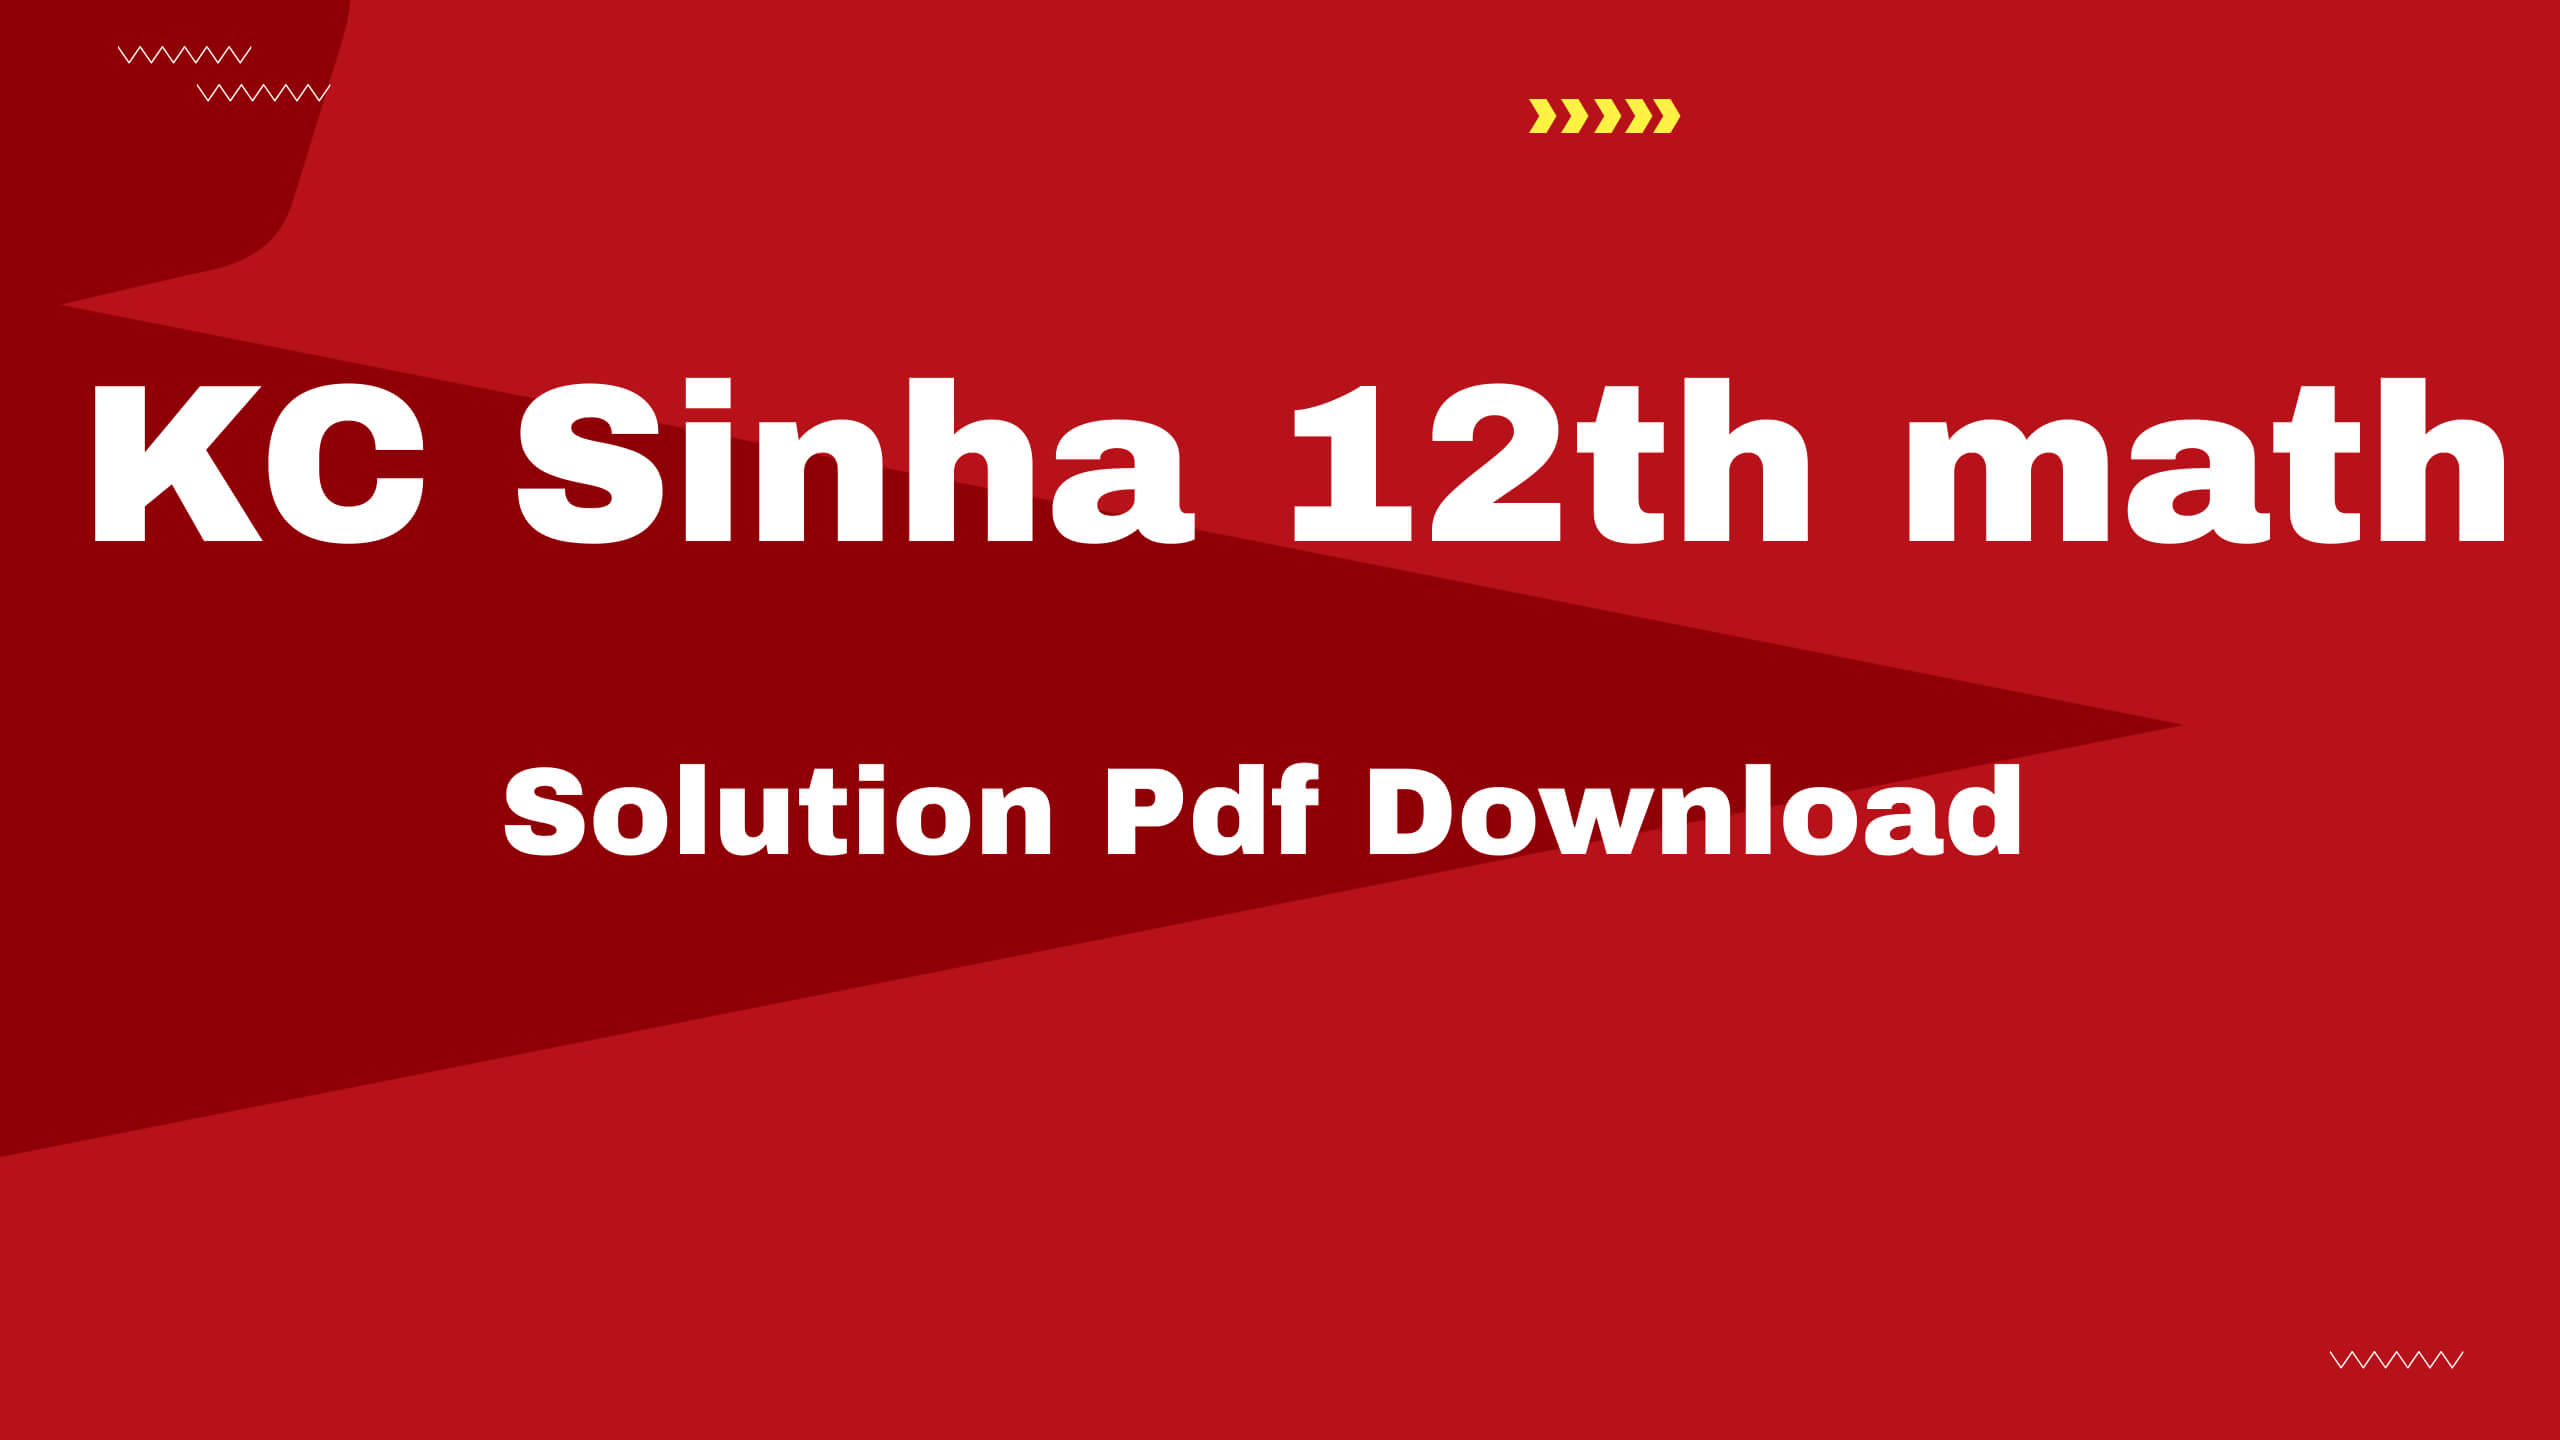 kc sinha 12th math solution pdf download